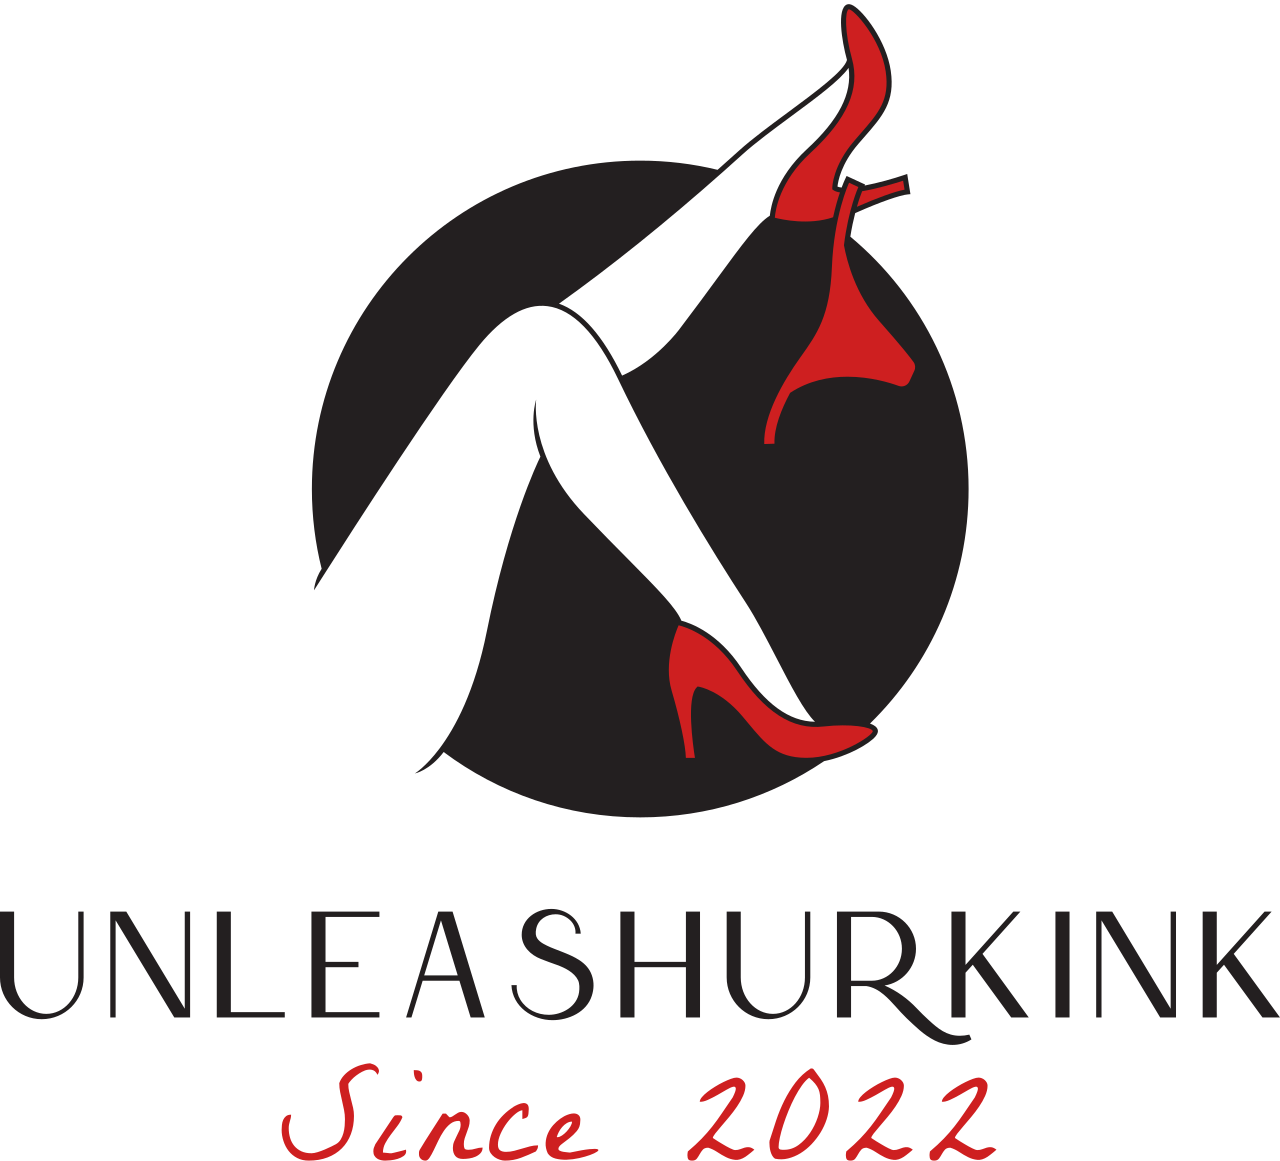 Unleashurkink's logo